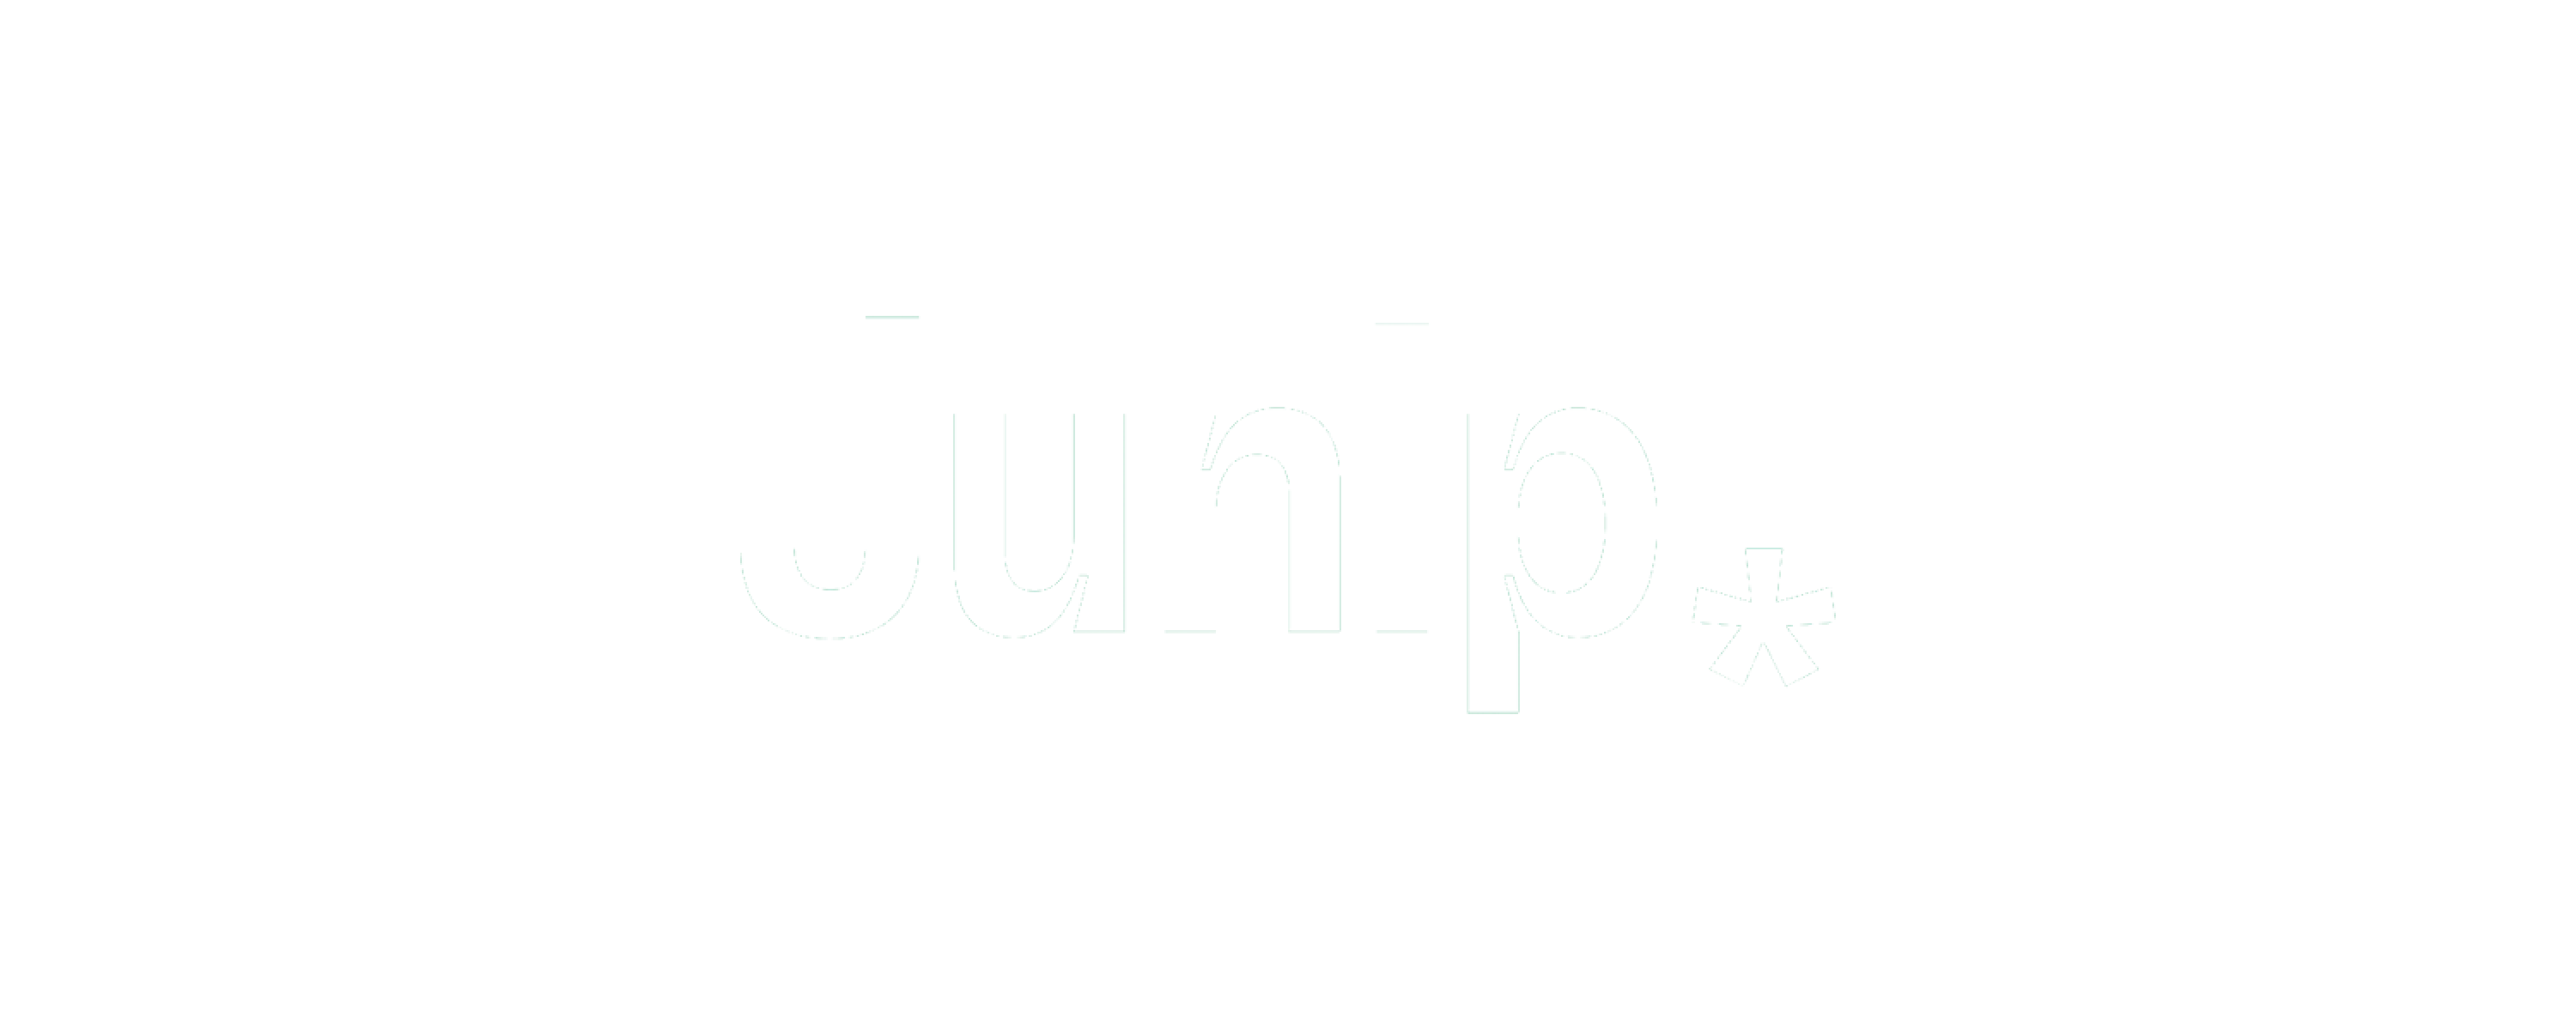 Junip logo